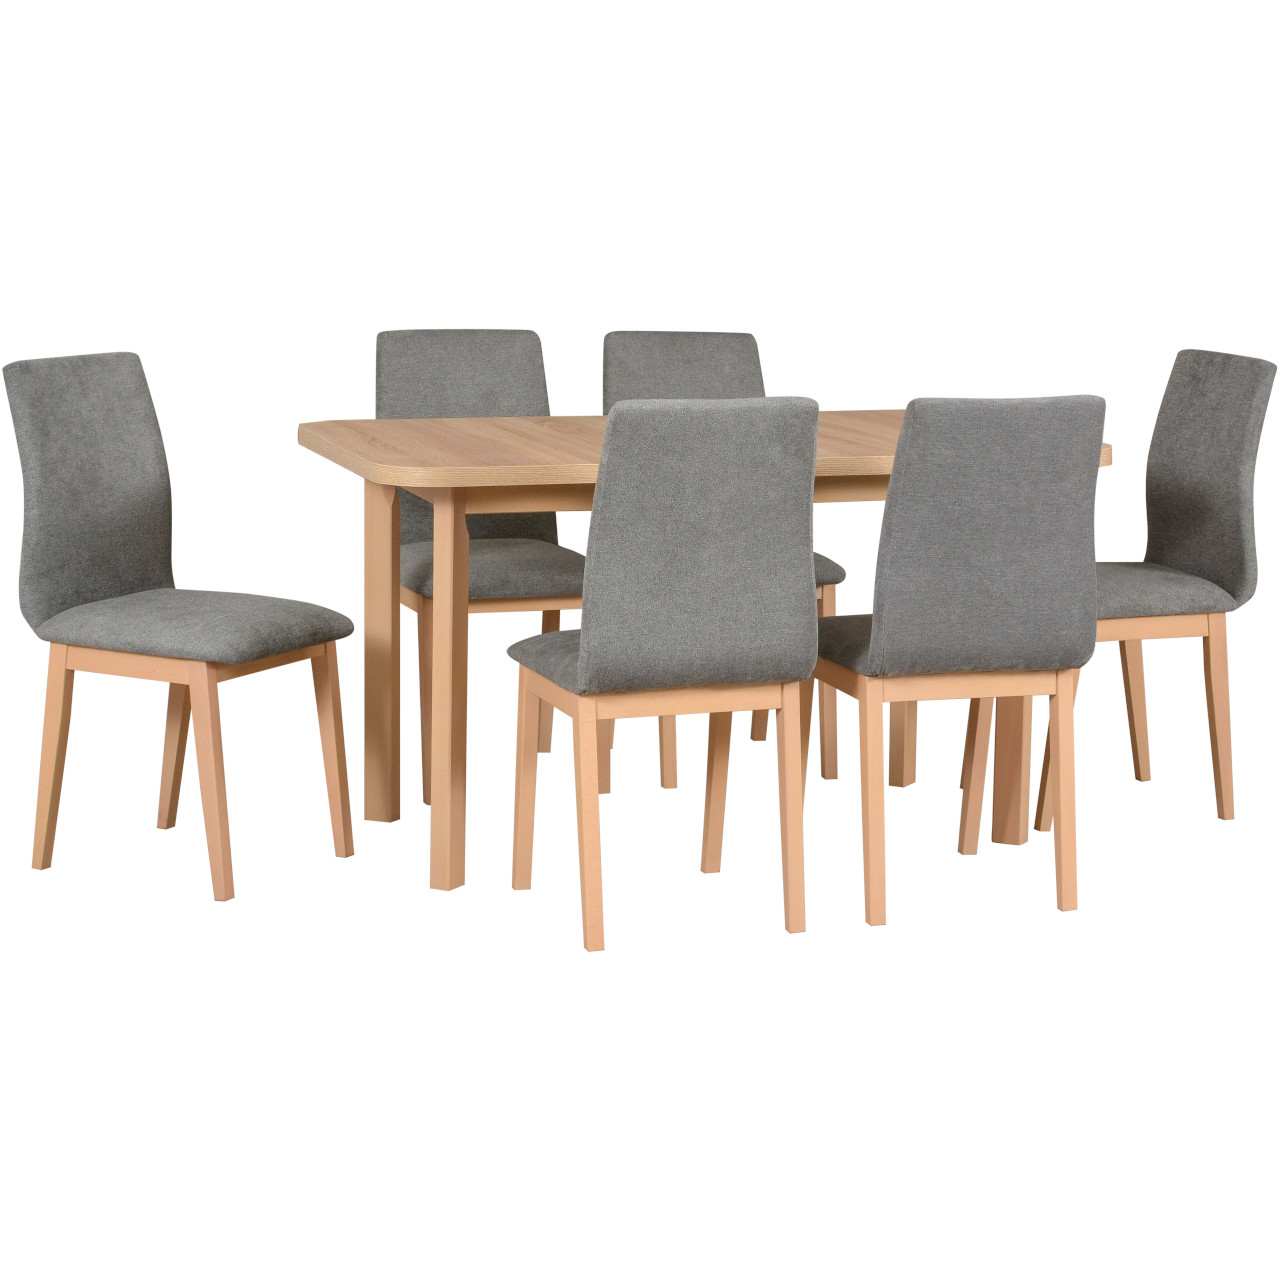 Table WENUS 2 P sonoma laminate + chairs LUNA 1 (6 pcs.) sonoma / 16B